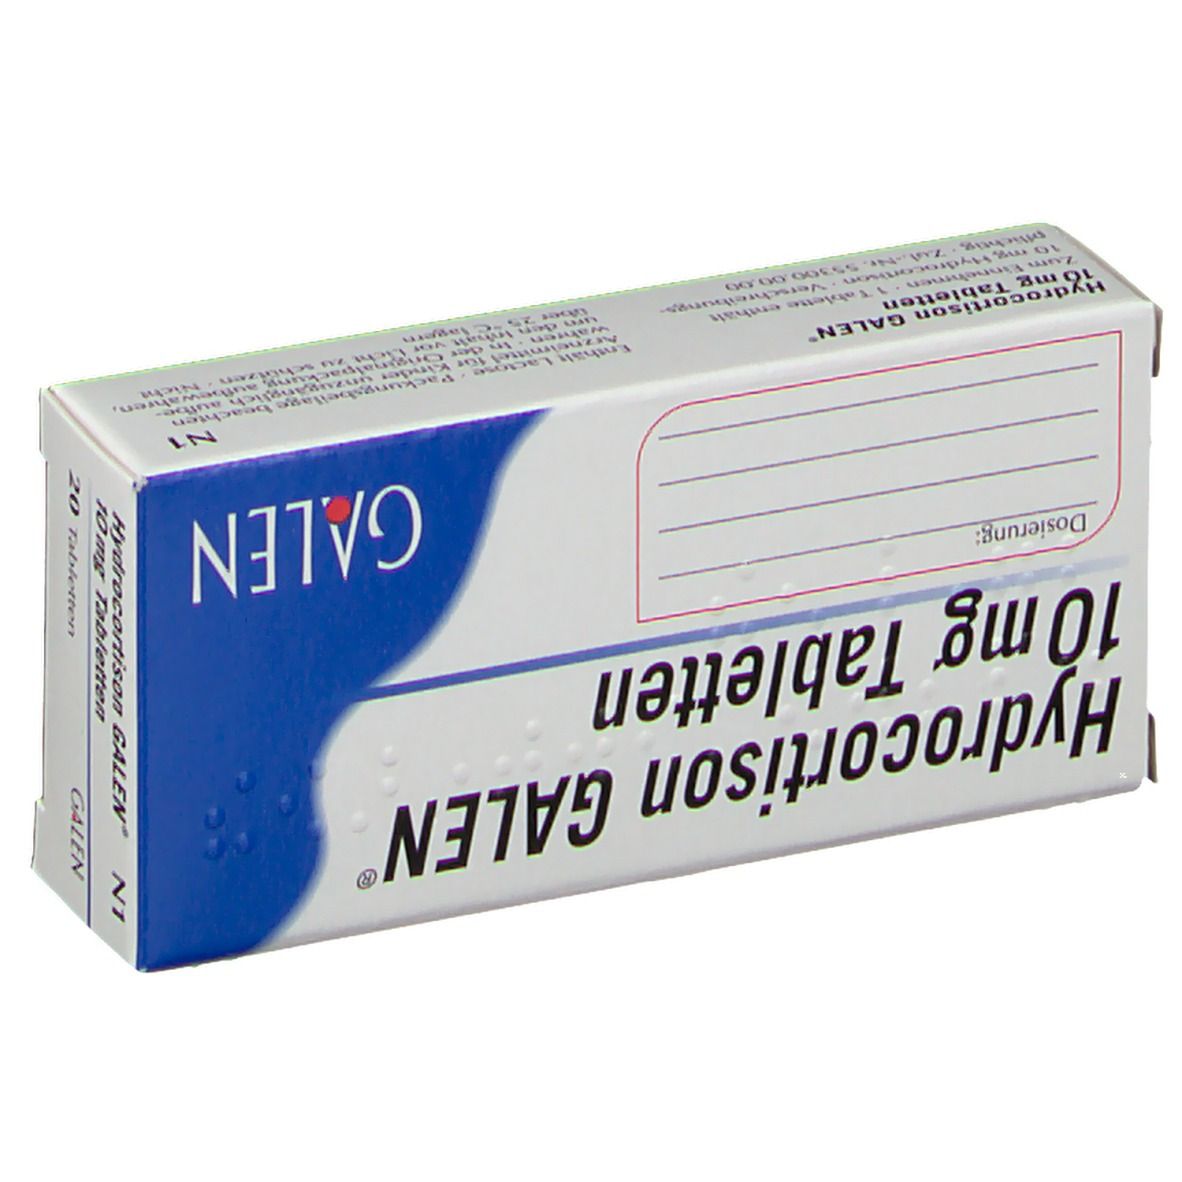 Hydrocortison GALEN® 10 mg